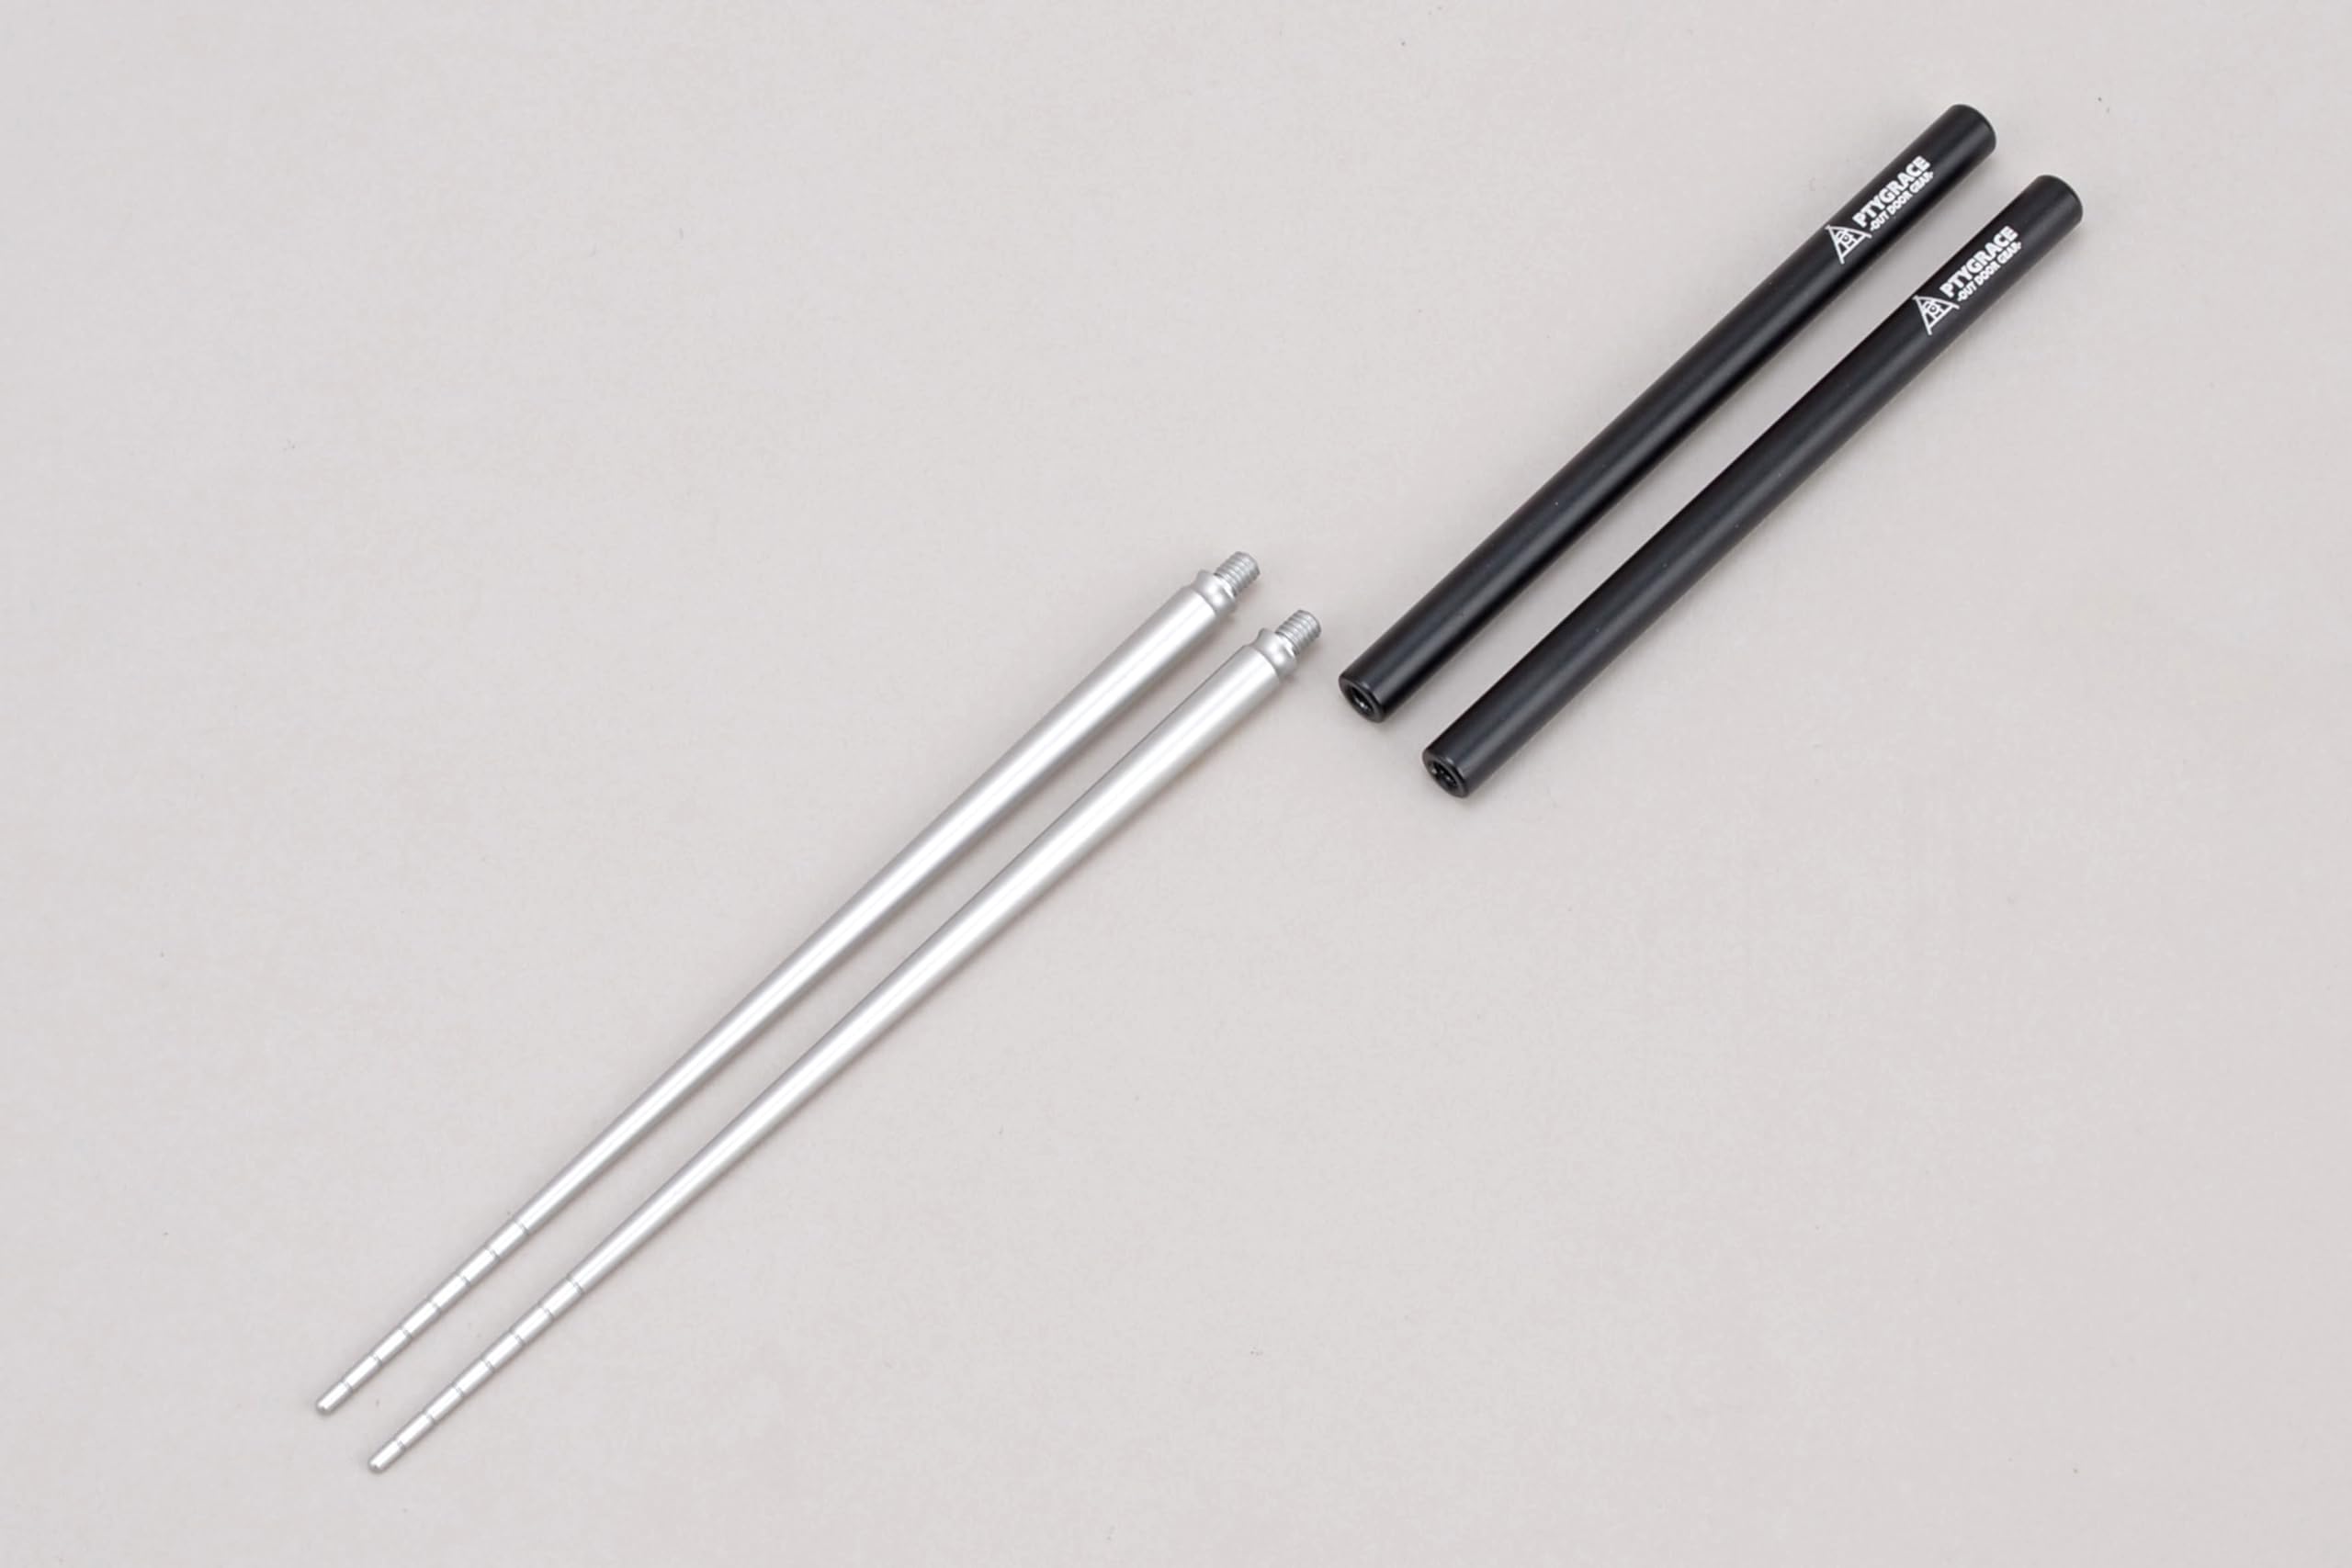 TSUNAGI Chopsticks, Lightweight, 9.1 inches (23 cm), Stylish, Outdoor, Camping, BBQ, Titanium, Aluminum, Made in Japan, Tsubamesanjo, Split Type, Foldable, Compact, Storage Case Included, Black